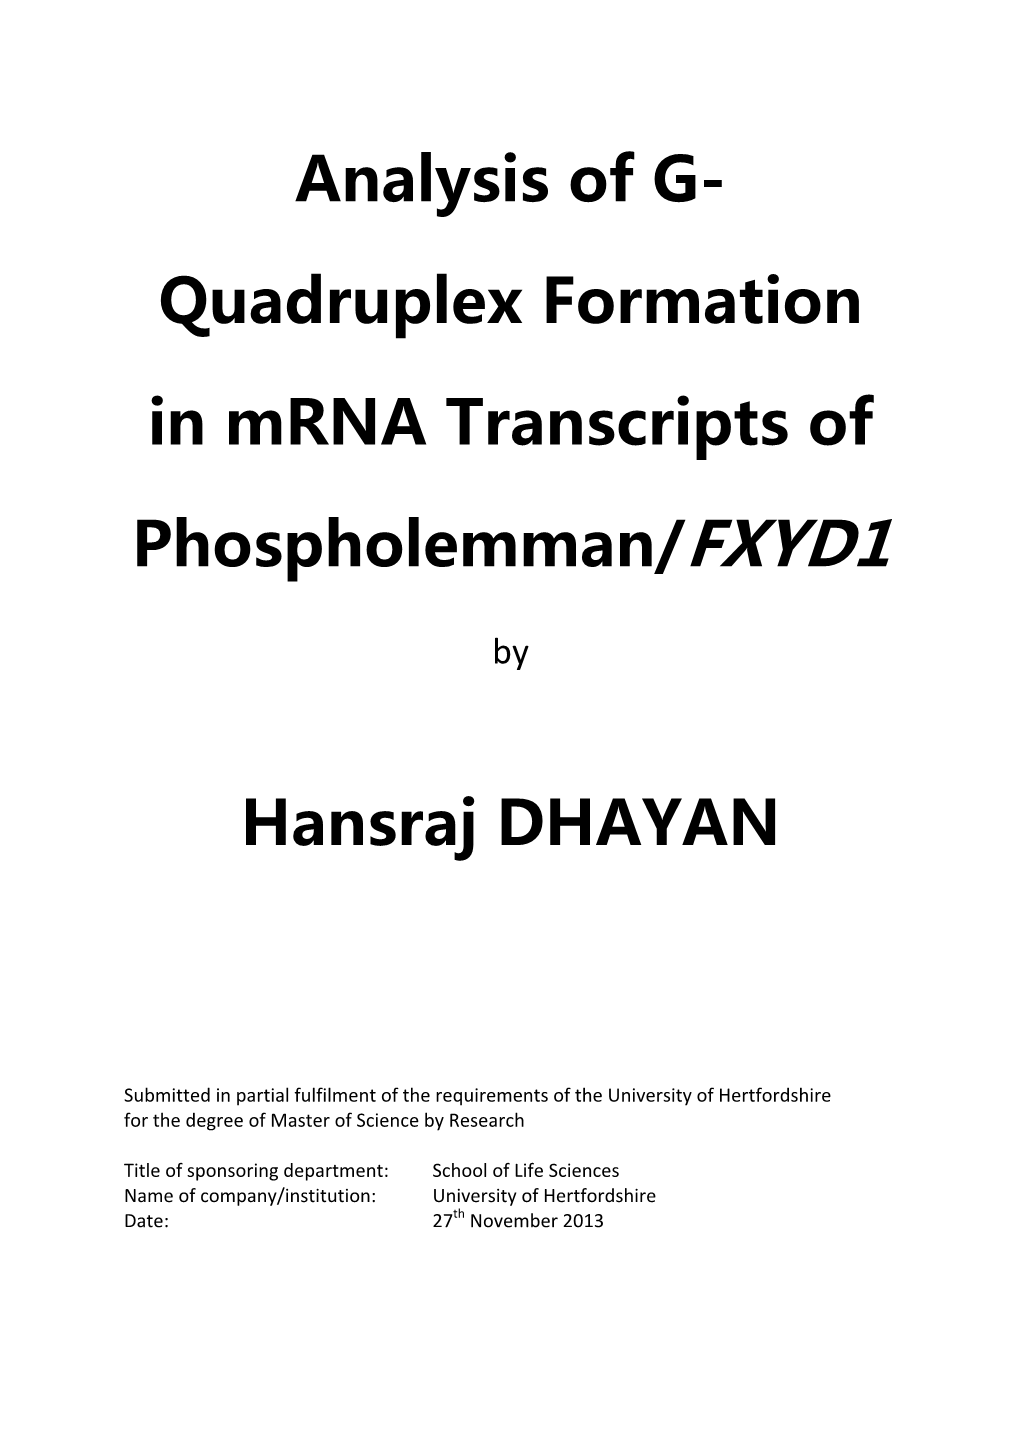 Analysis of G- Quadruplex Formation in Mrna Transcripts Of